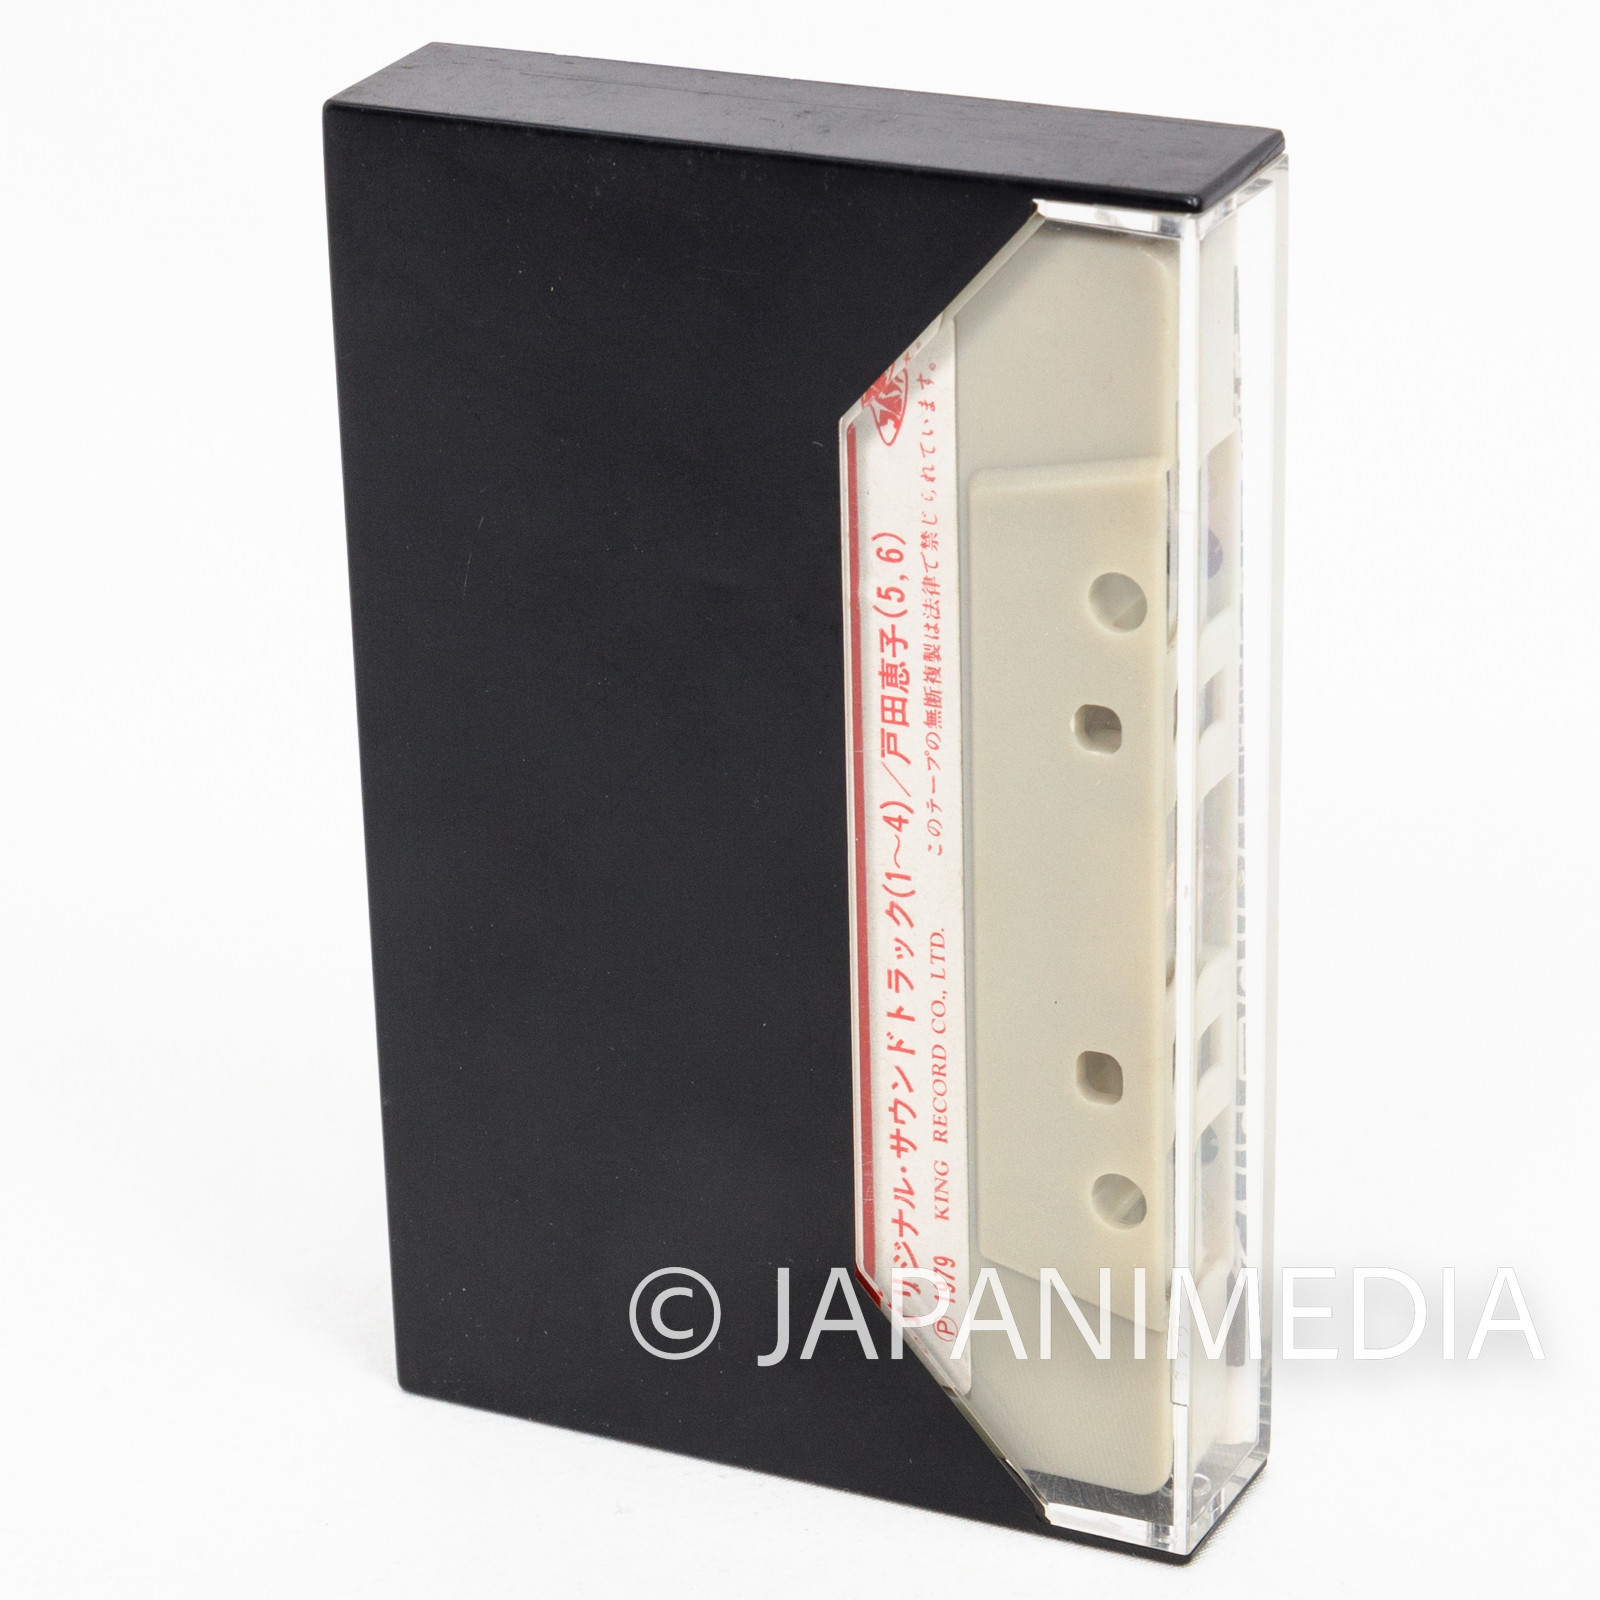 Mobile Suit Gundam : on the Battlefield Music Cassette Tape A(H)-321